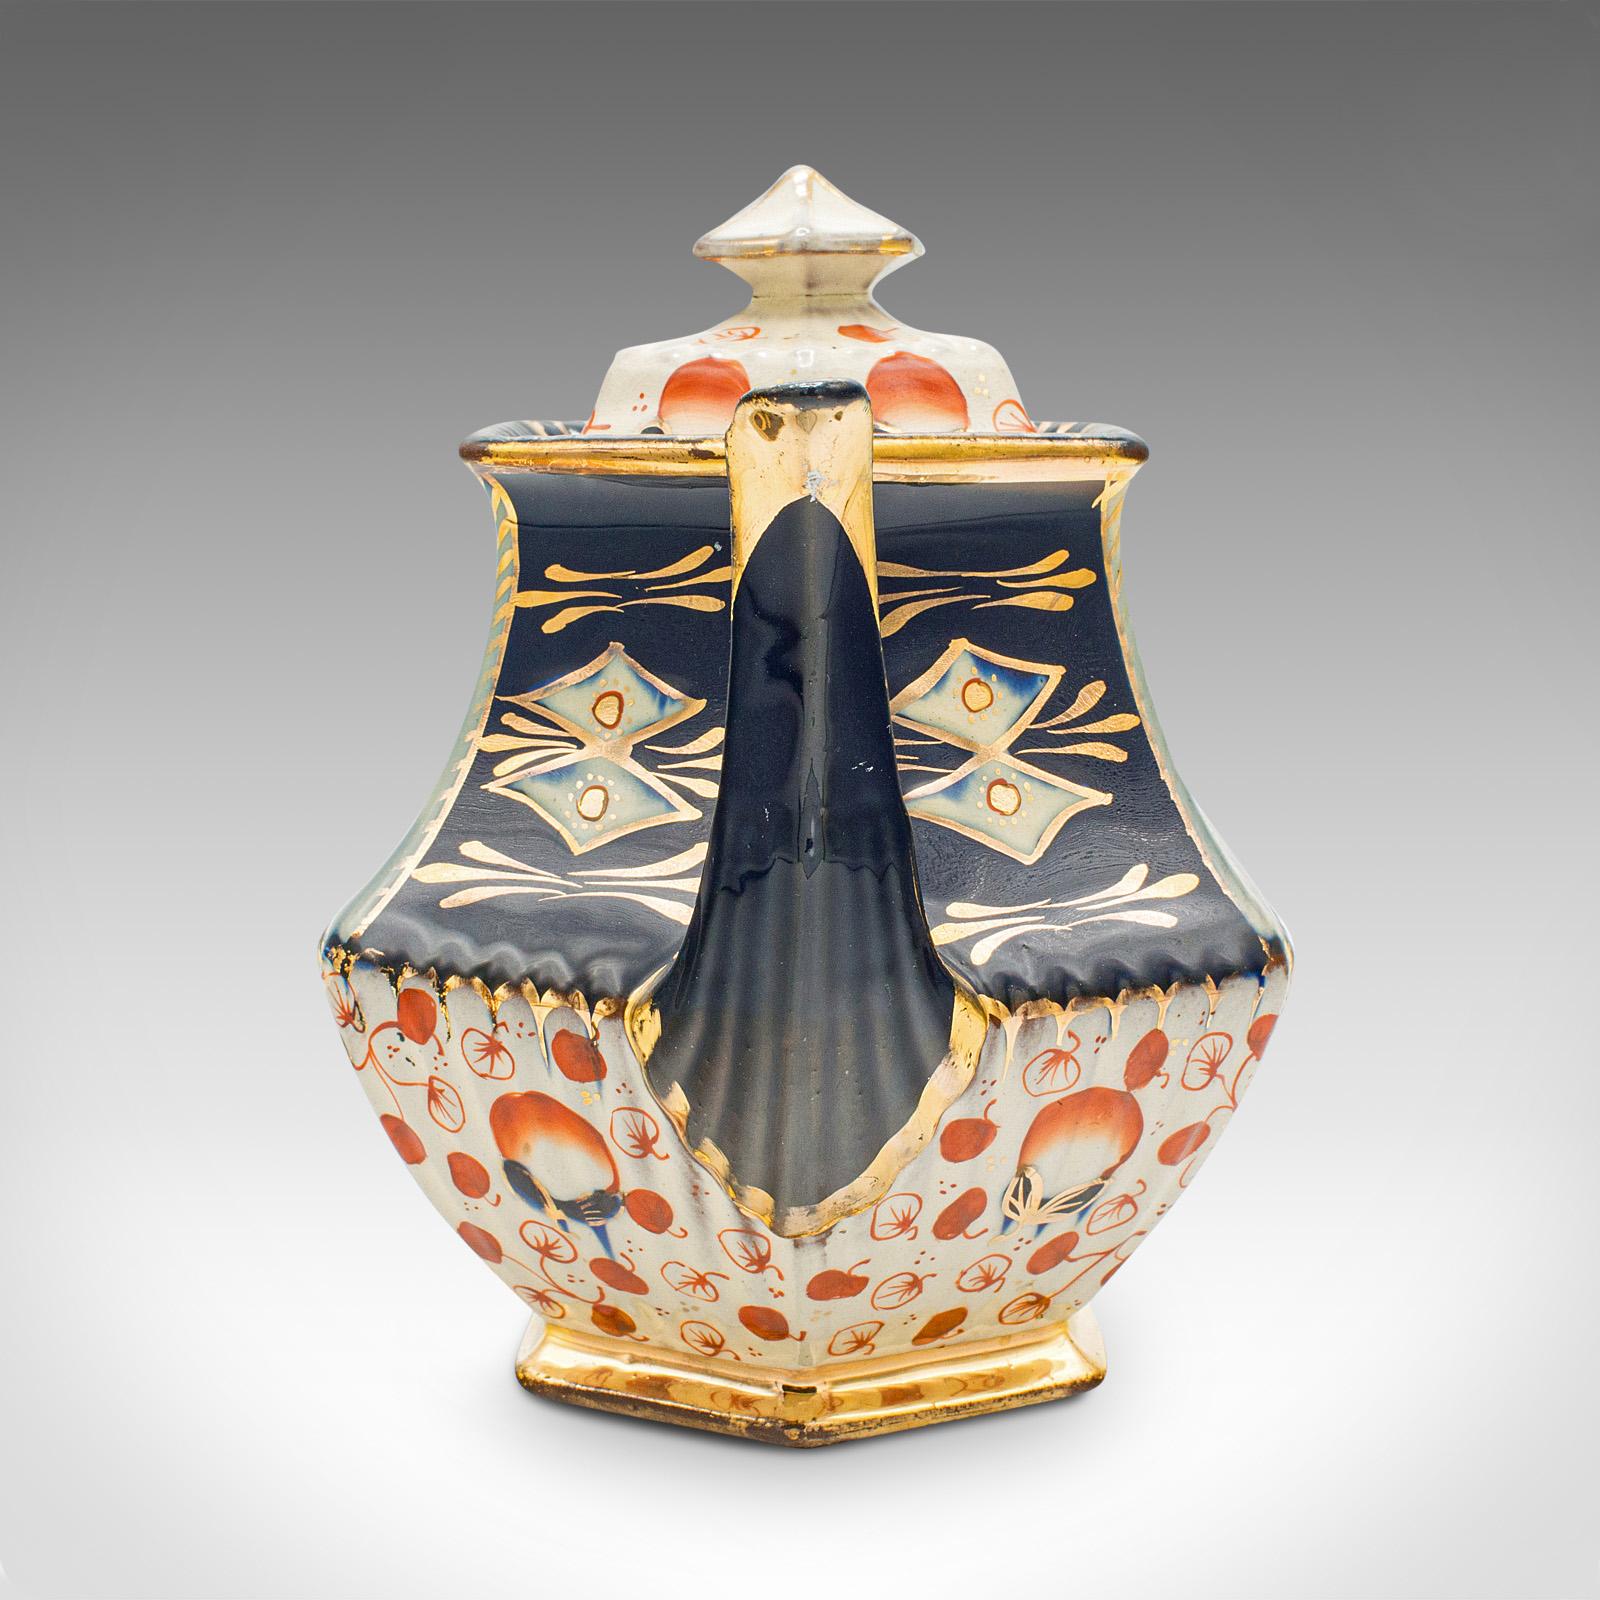 Anglo-Japanese Antique Imari Pattern Teapot, English, Ceramic, Decorative Tea Kettle, Victorian For Sale